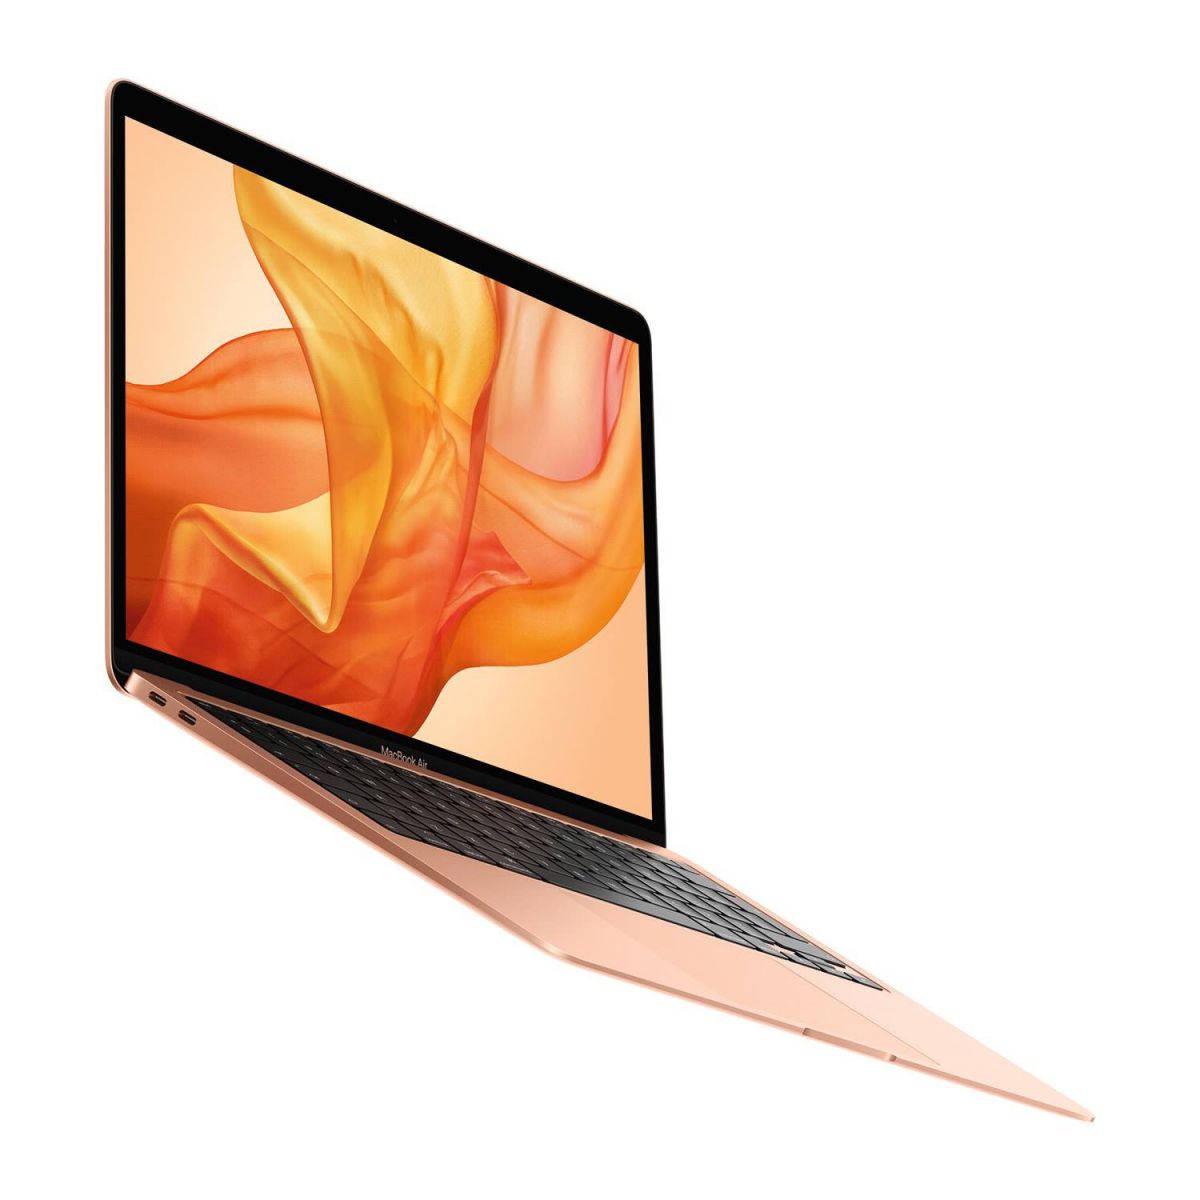 MacBook Air 2020 rose gold cũ